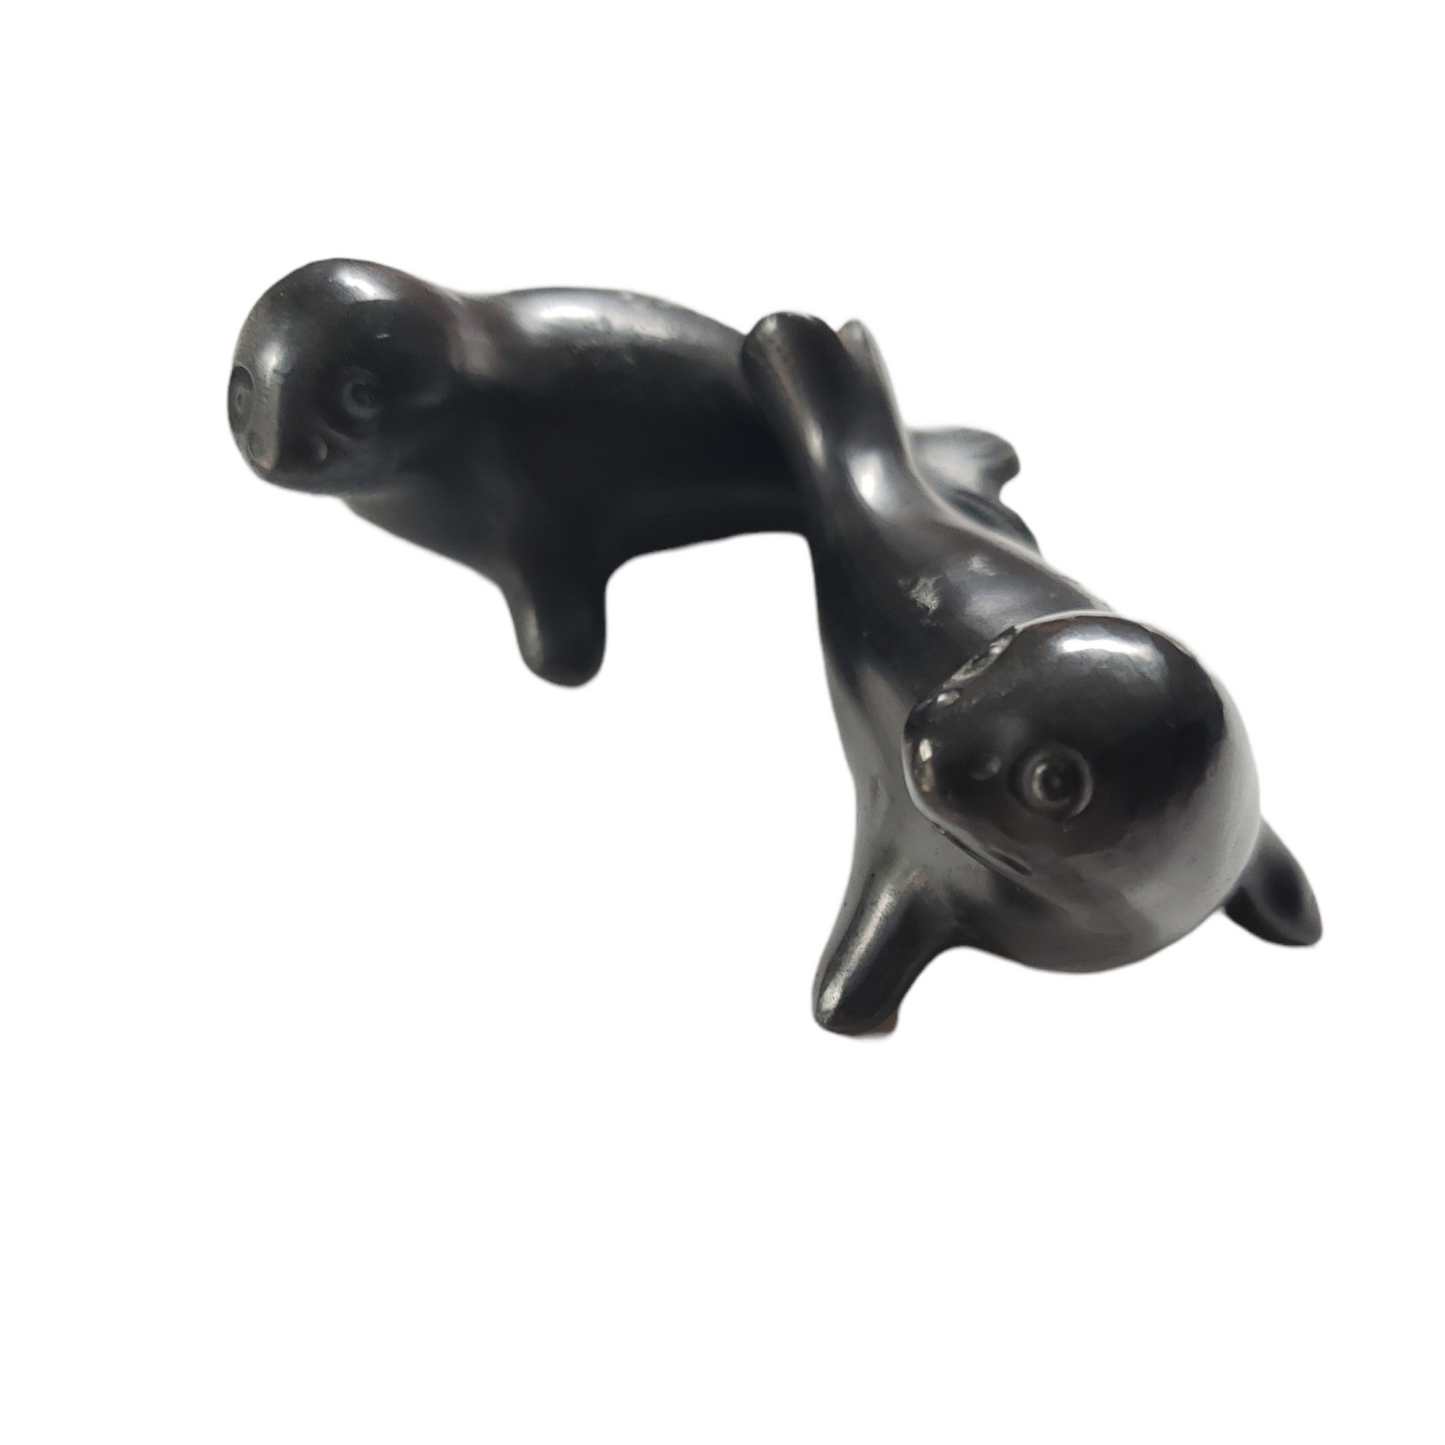 Barro Negro Seal Figurine from Oaxaca Mexico